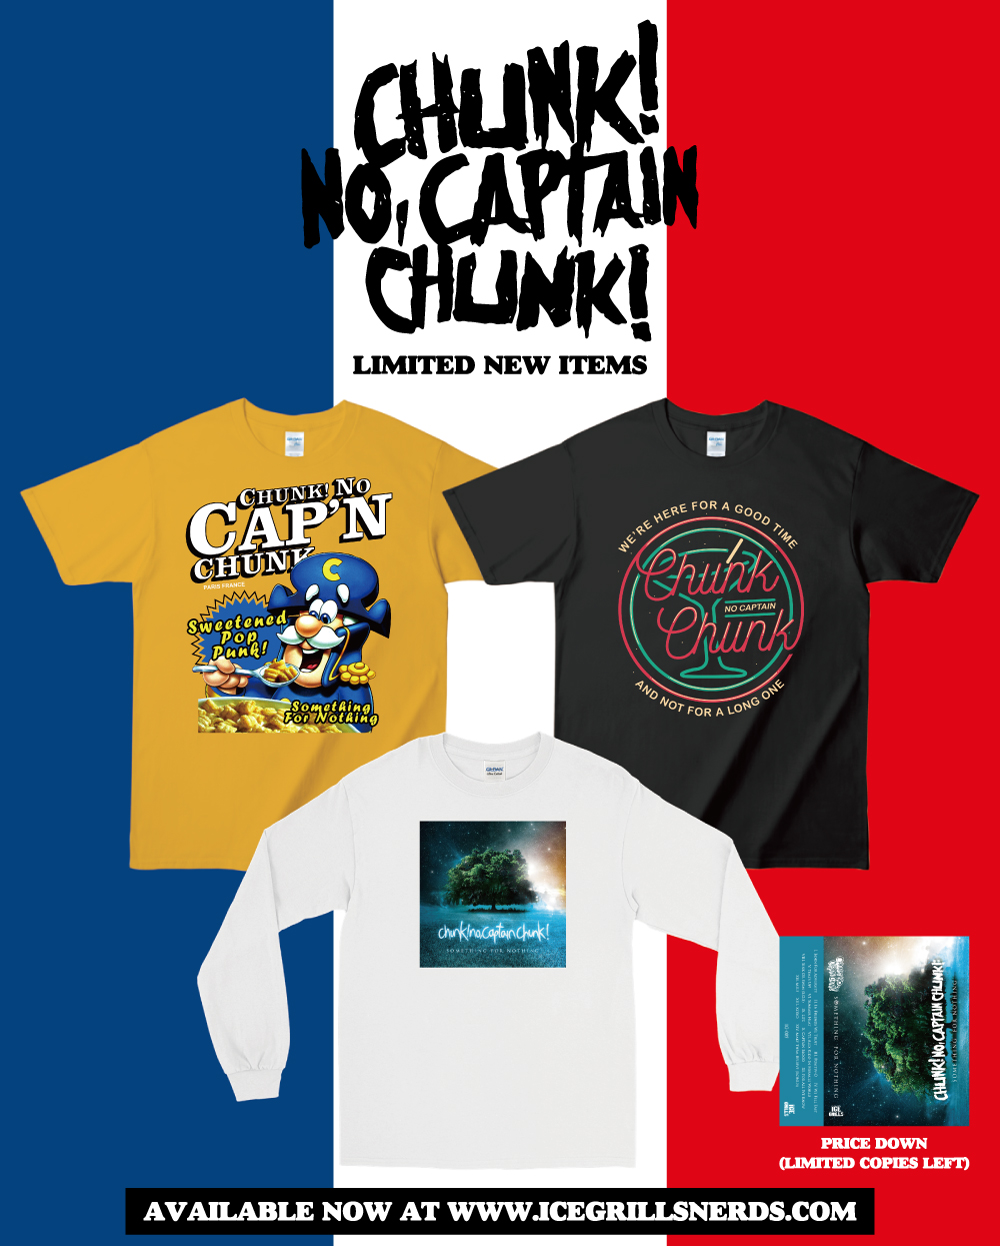 Chunk! No, Captain Chunk! – Limited new items